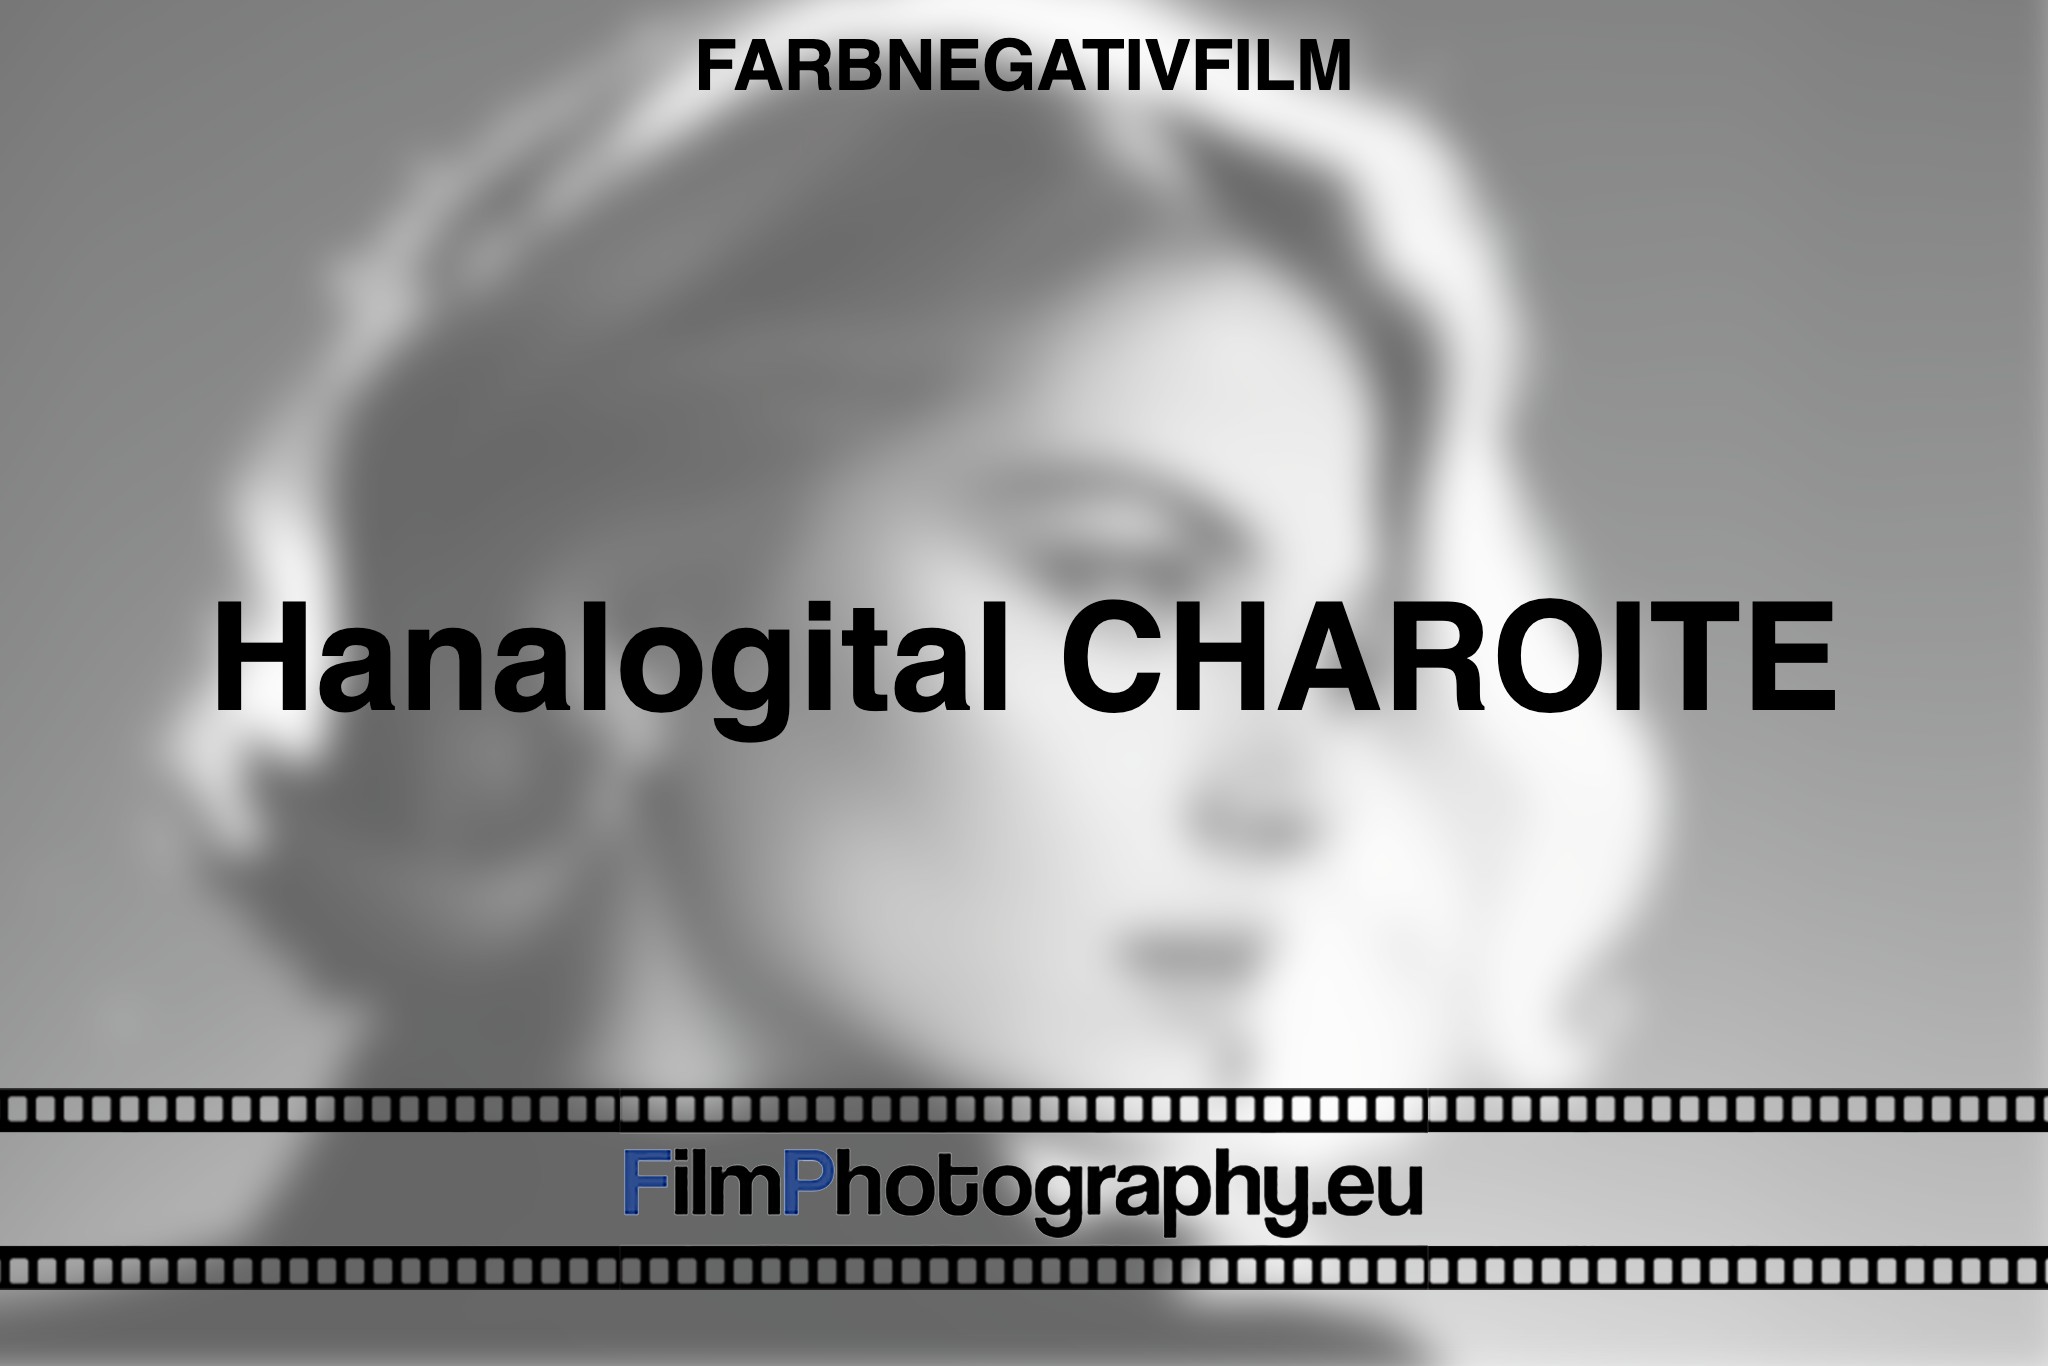 hanalogital-charoite-farbnegativfilm-bnv